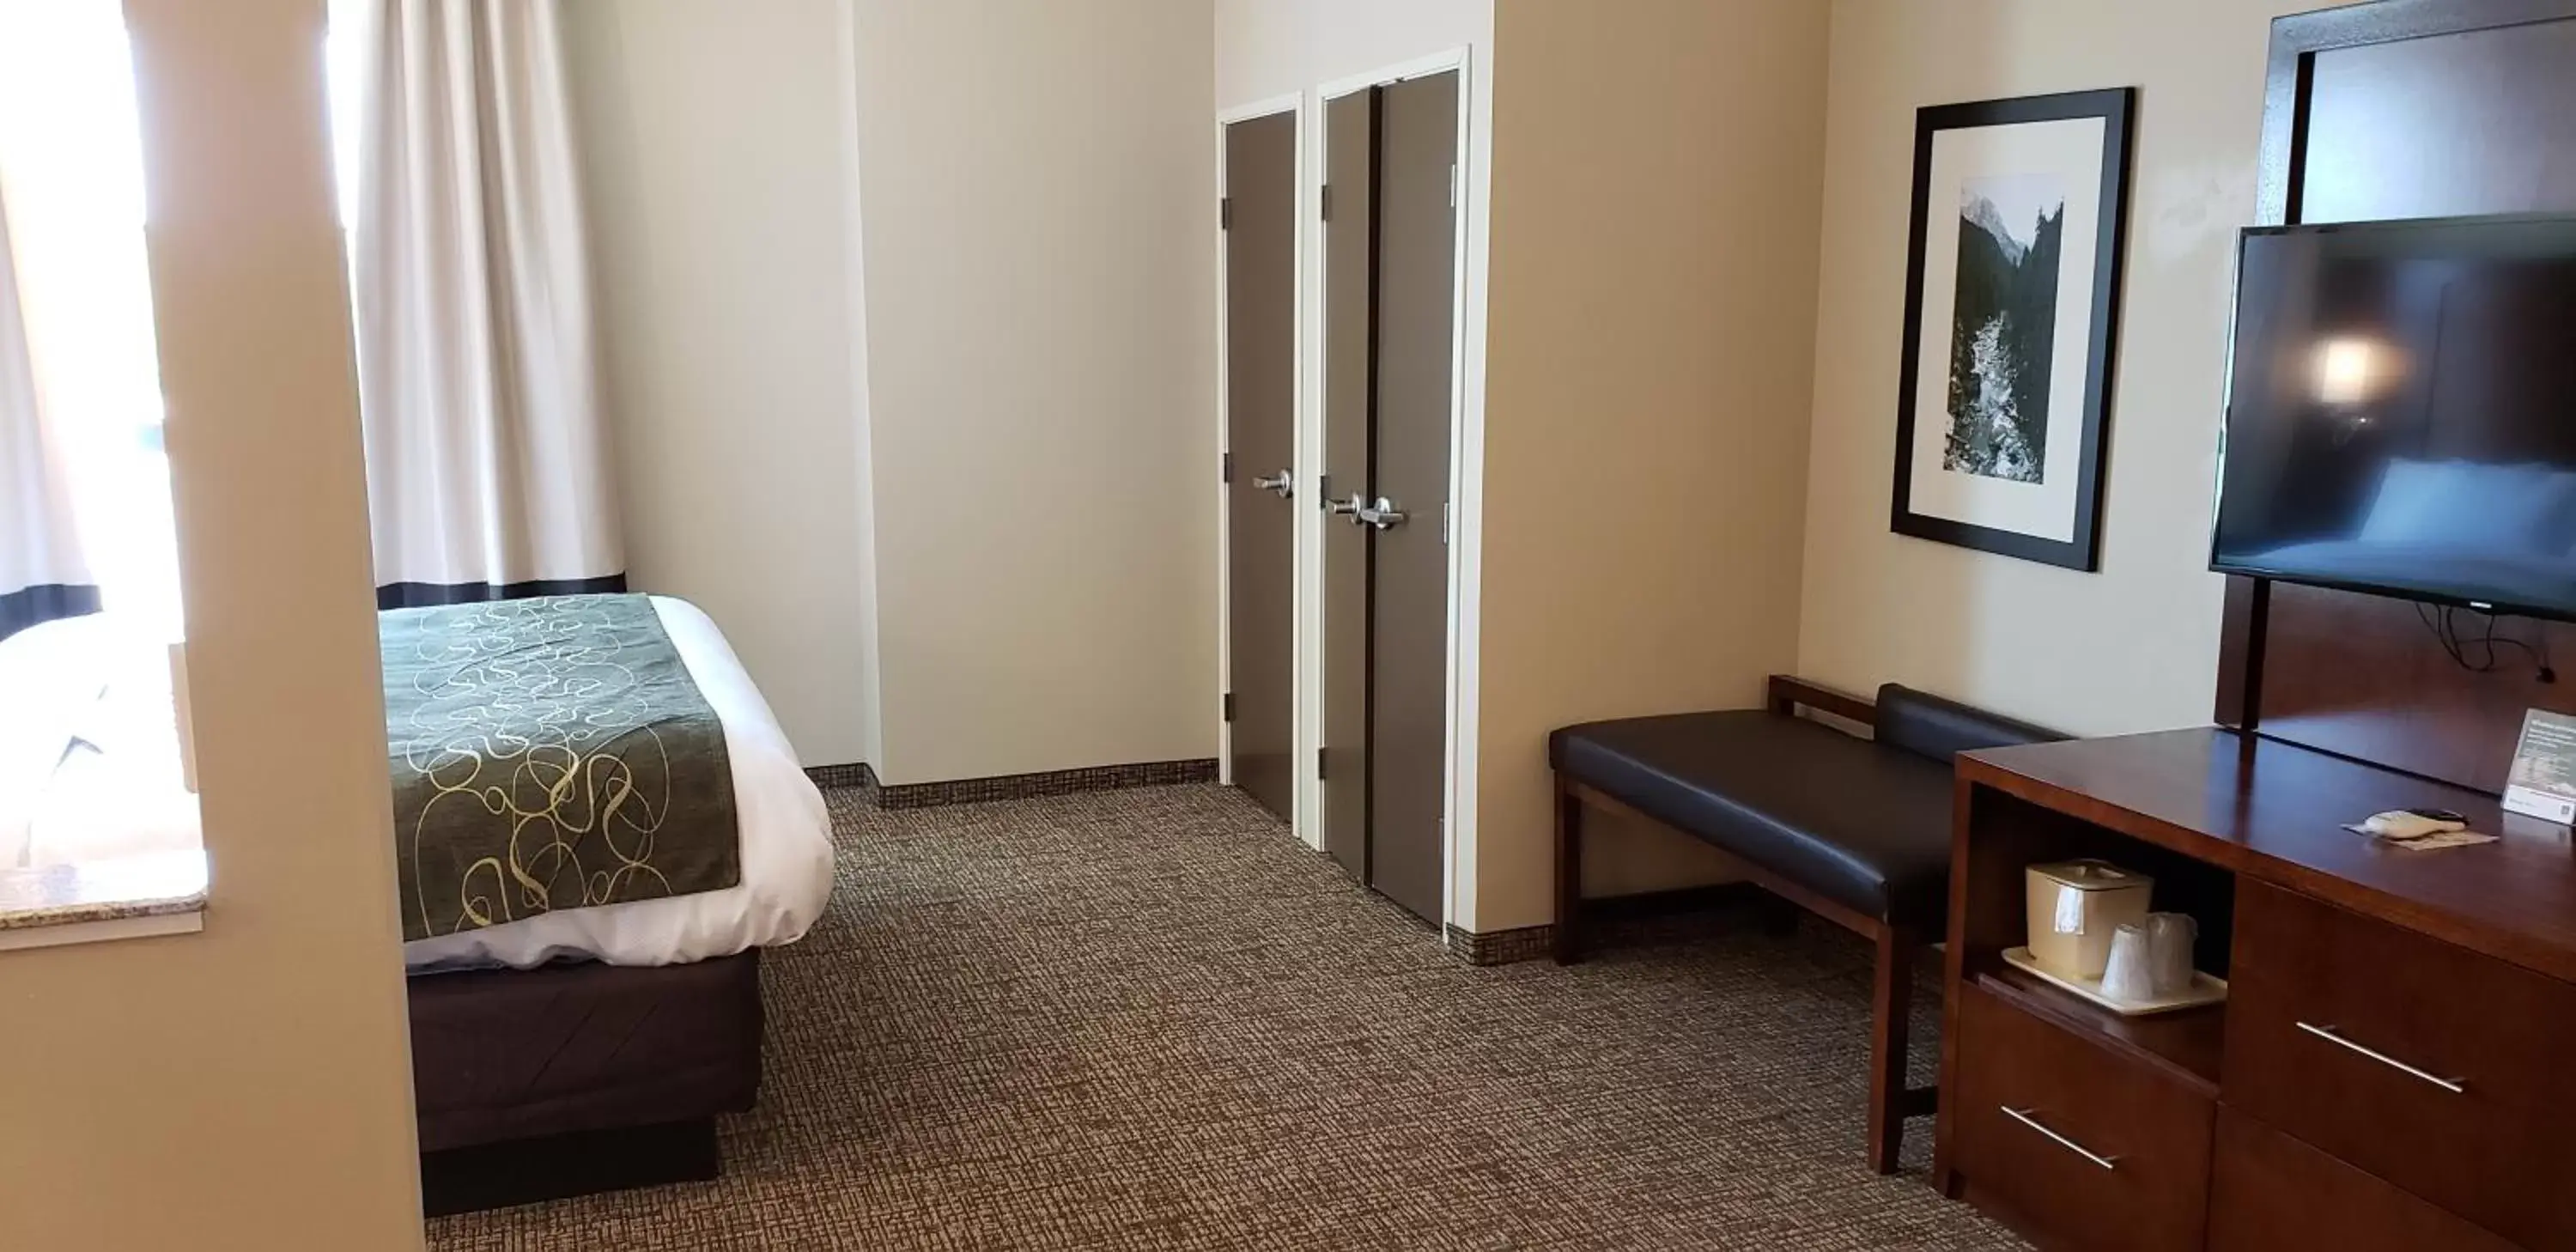 Bedroom, TV/Entertainment Center in Comfort Suites Denver near Anschutz Medical Campus